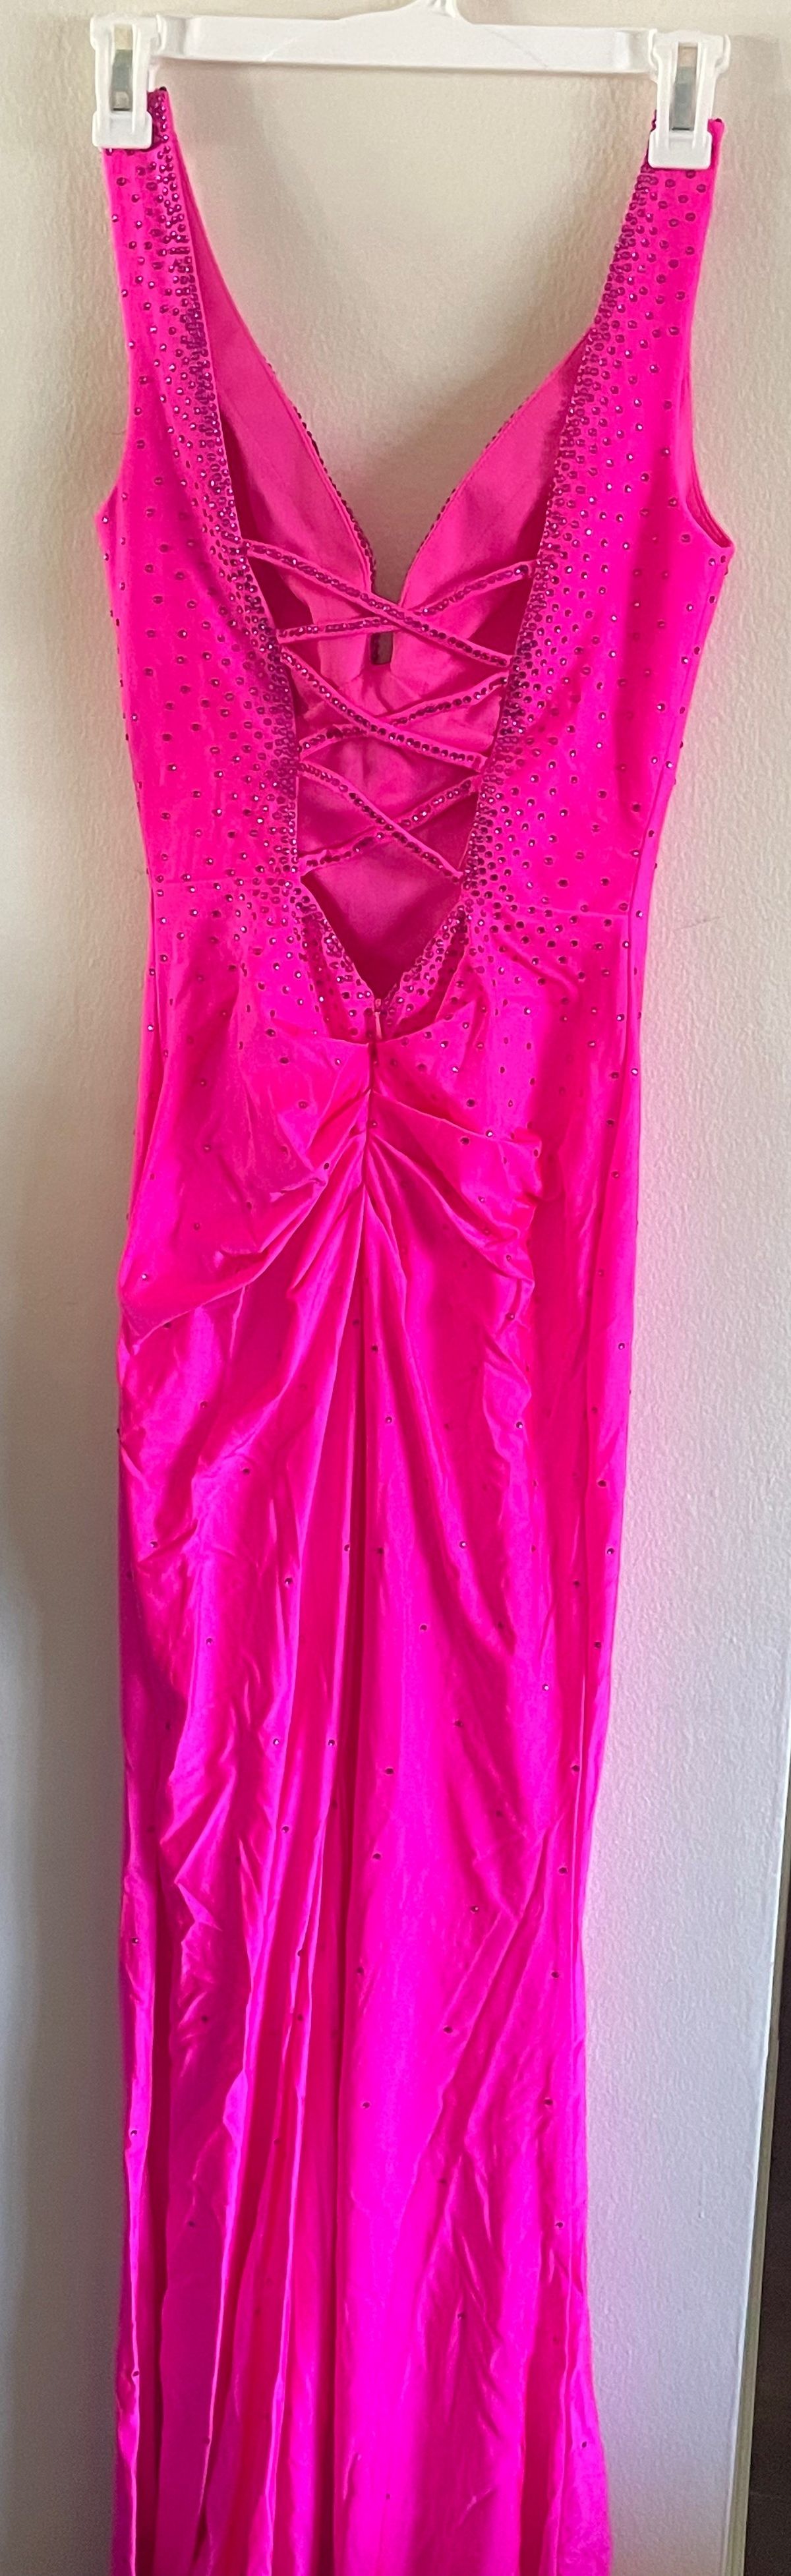 Size 2 Plunge Hot Pink Side Slit Dress on Queenly